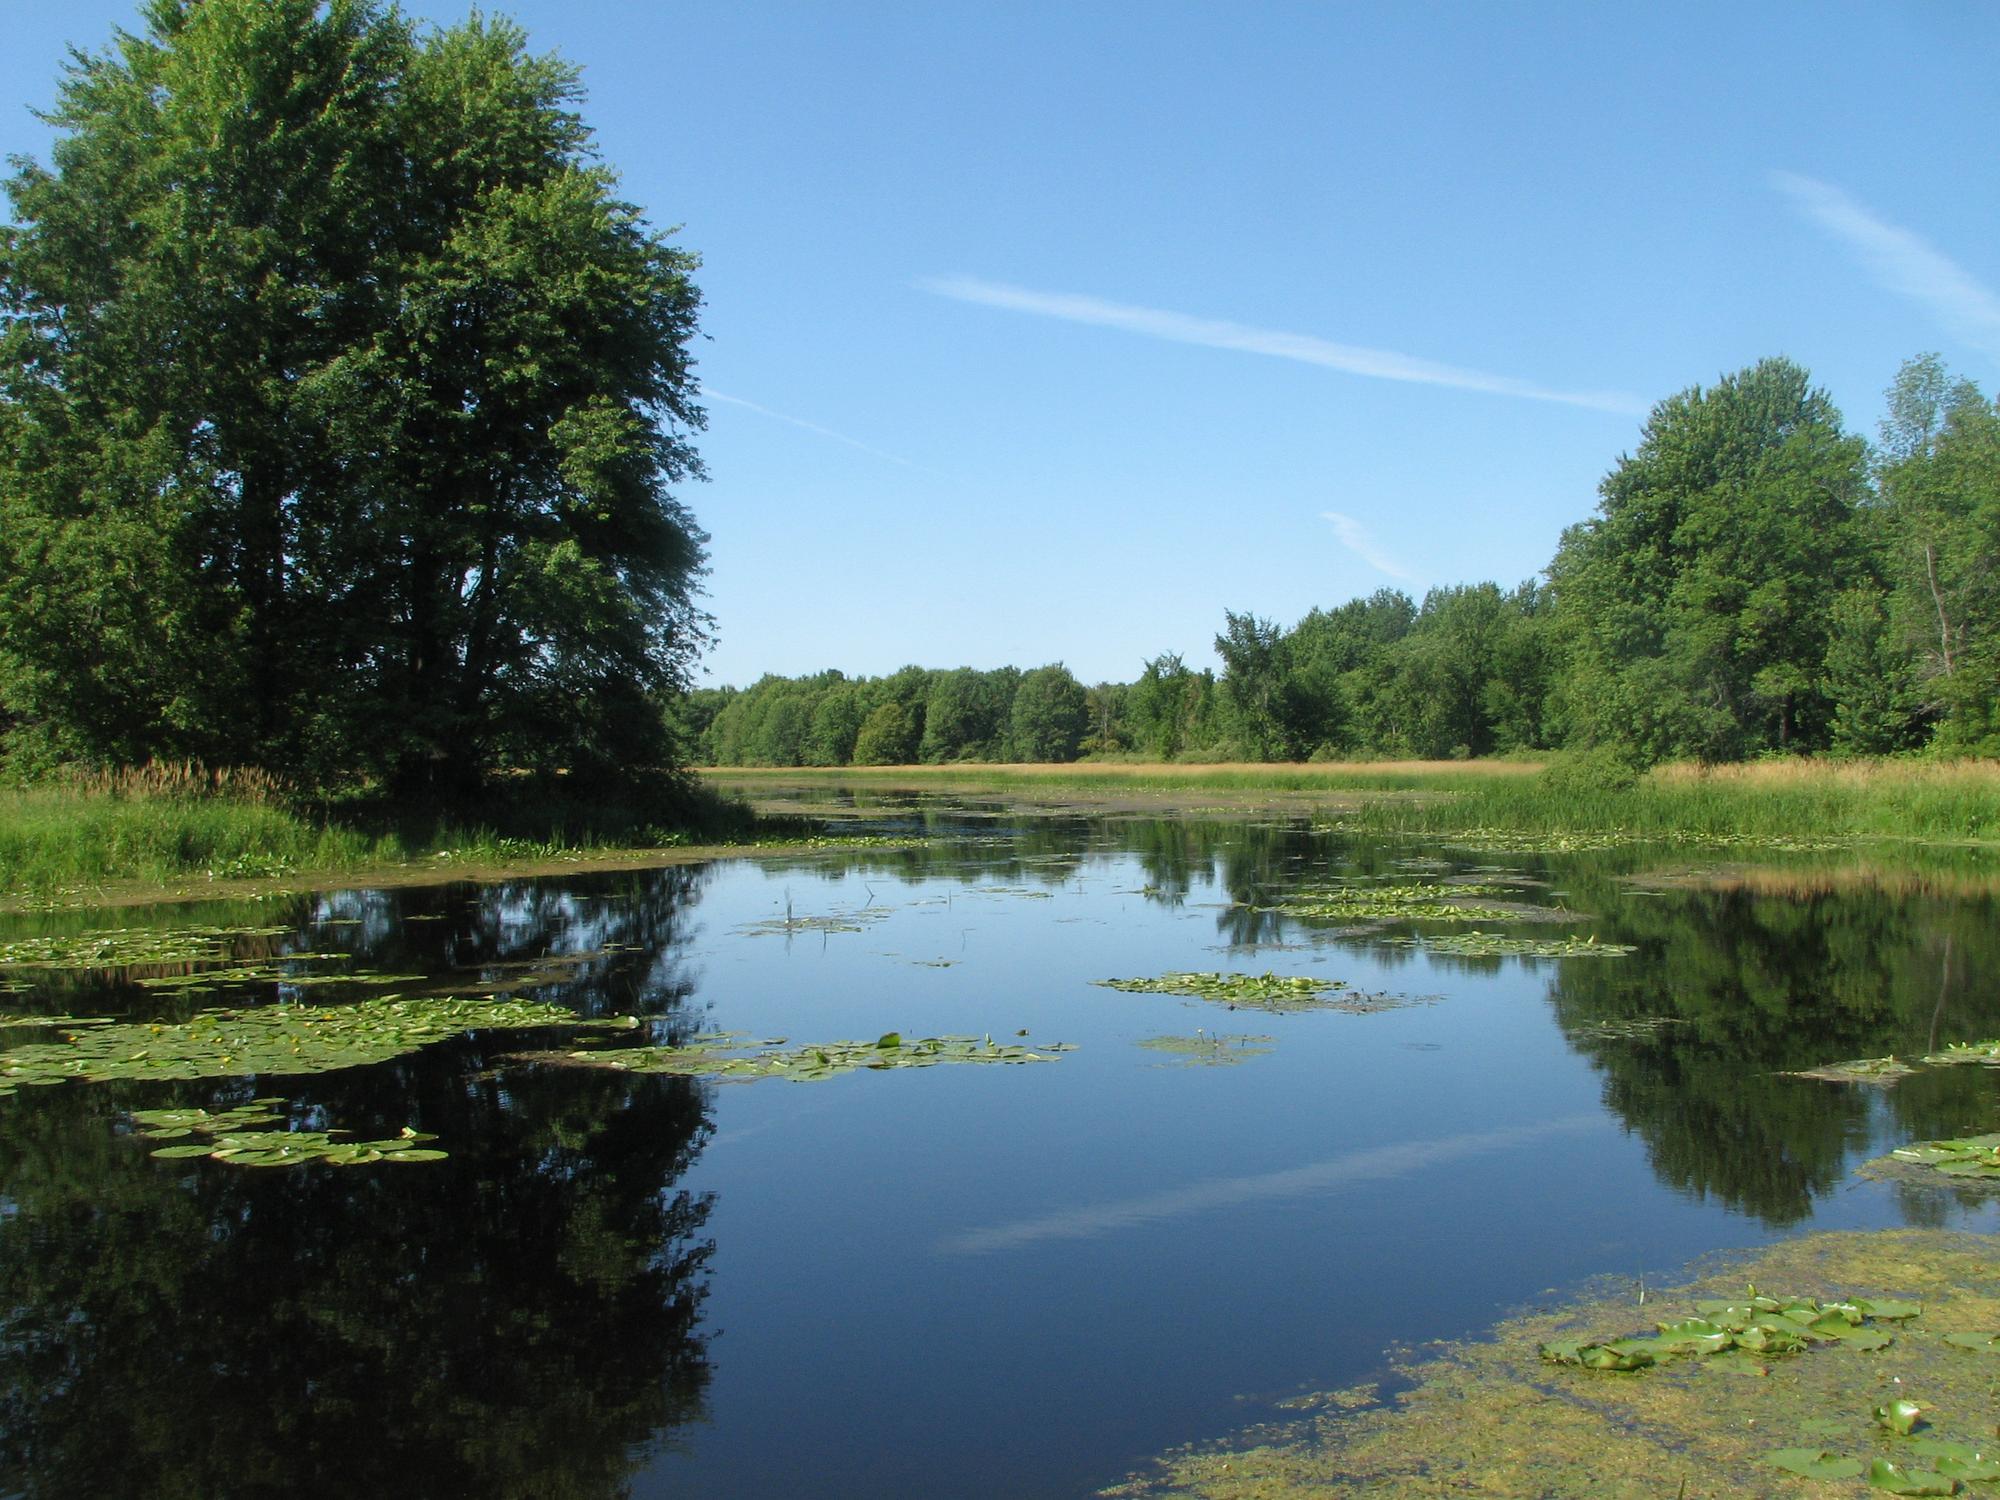 Public lands are focus of South Nation wetland restoration plan